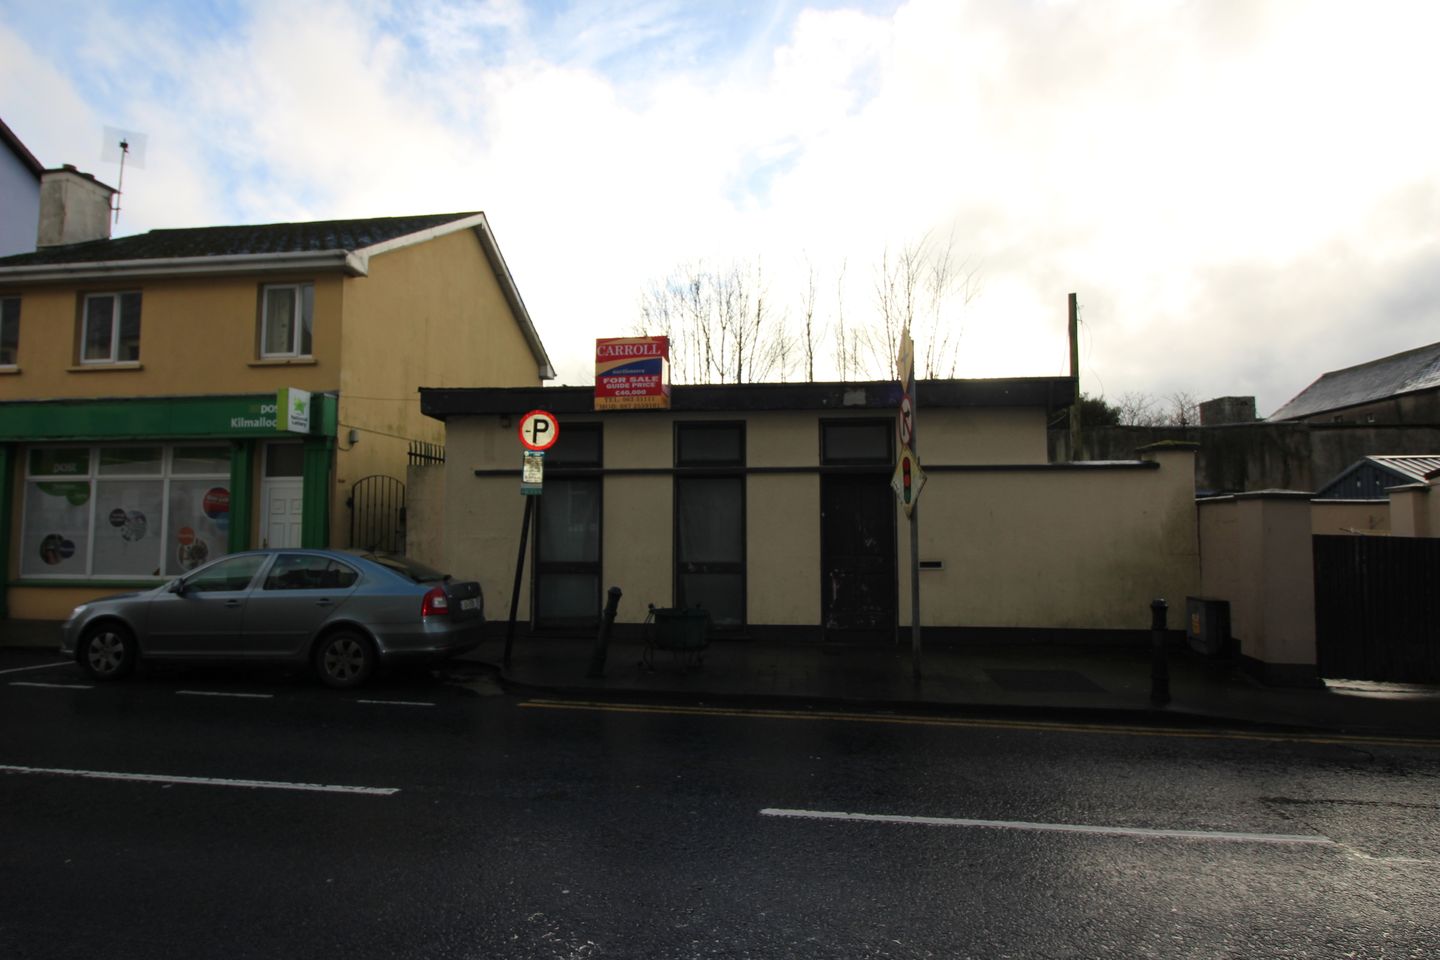 Lord Edward Street, Kilmallock, Co. Limerick